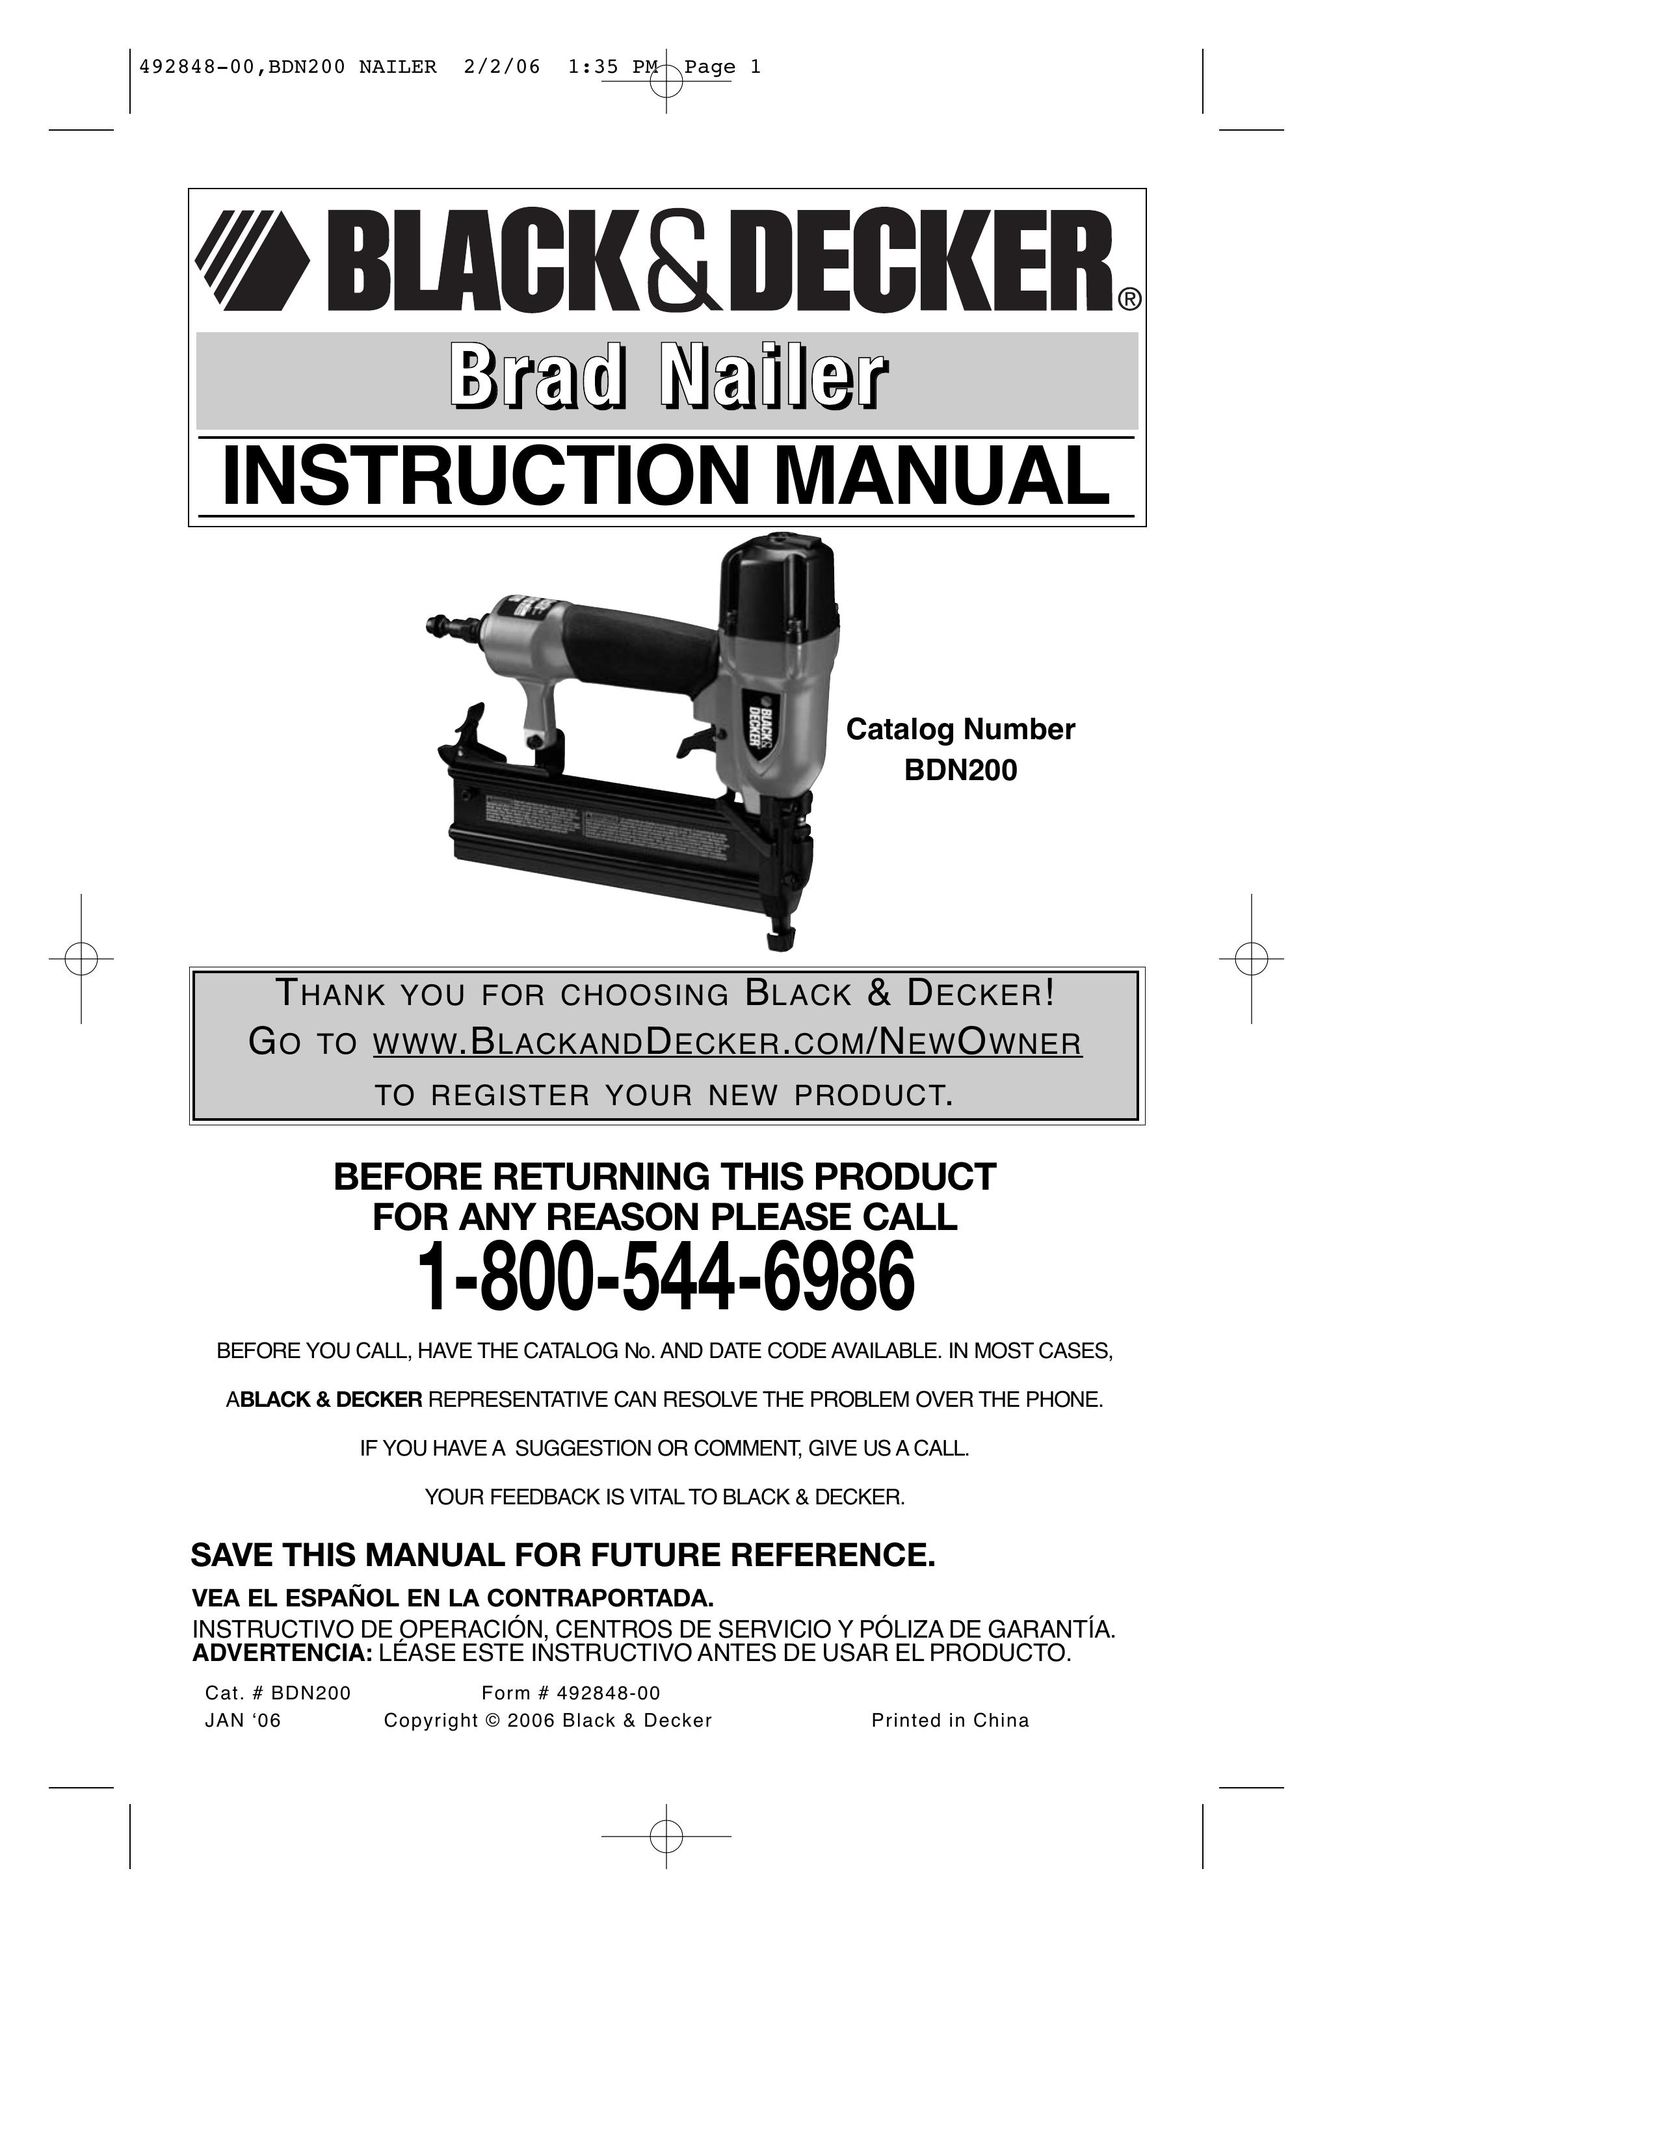 Black & Decker 492848-00 Nail Gun User Manual